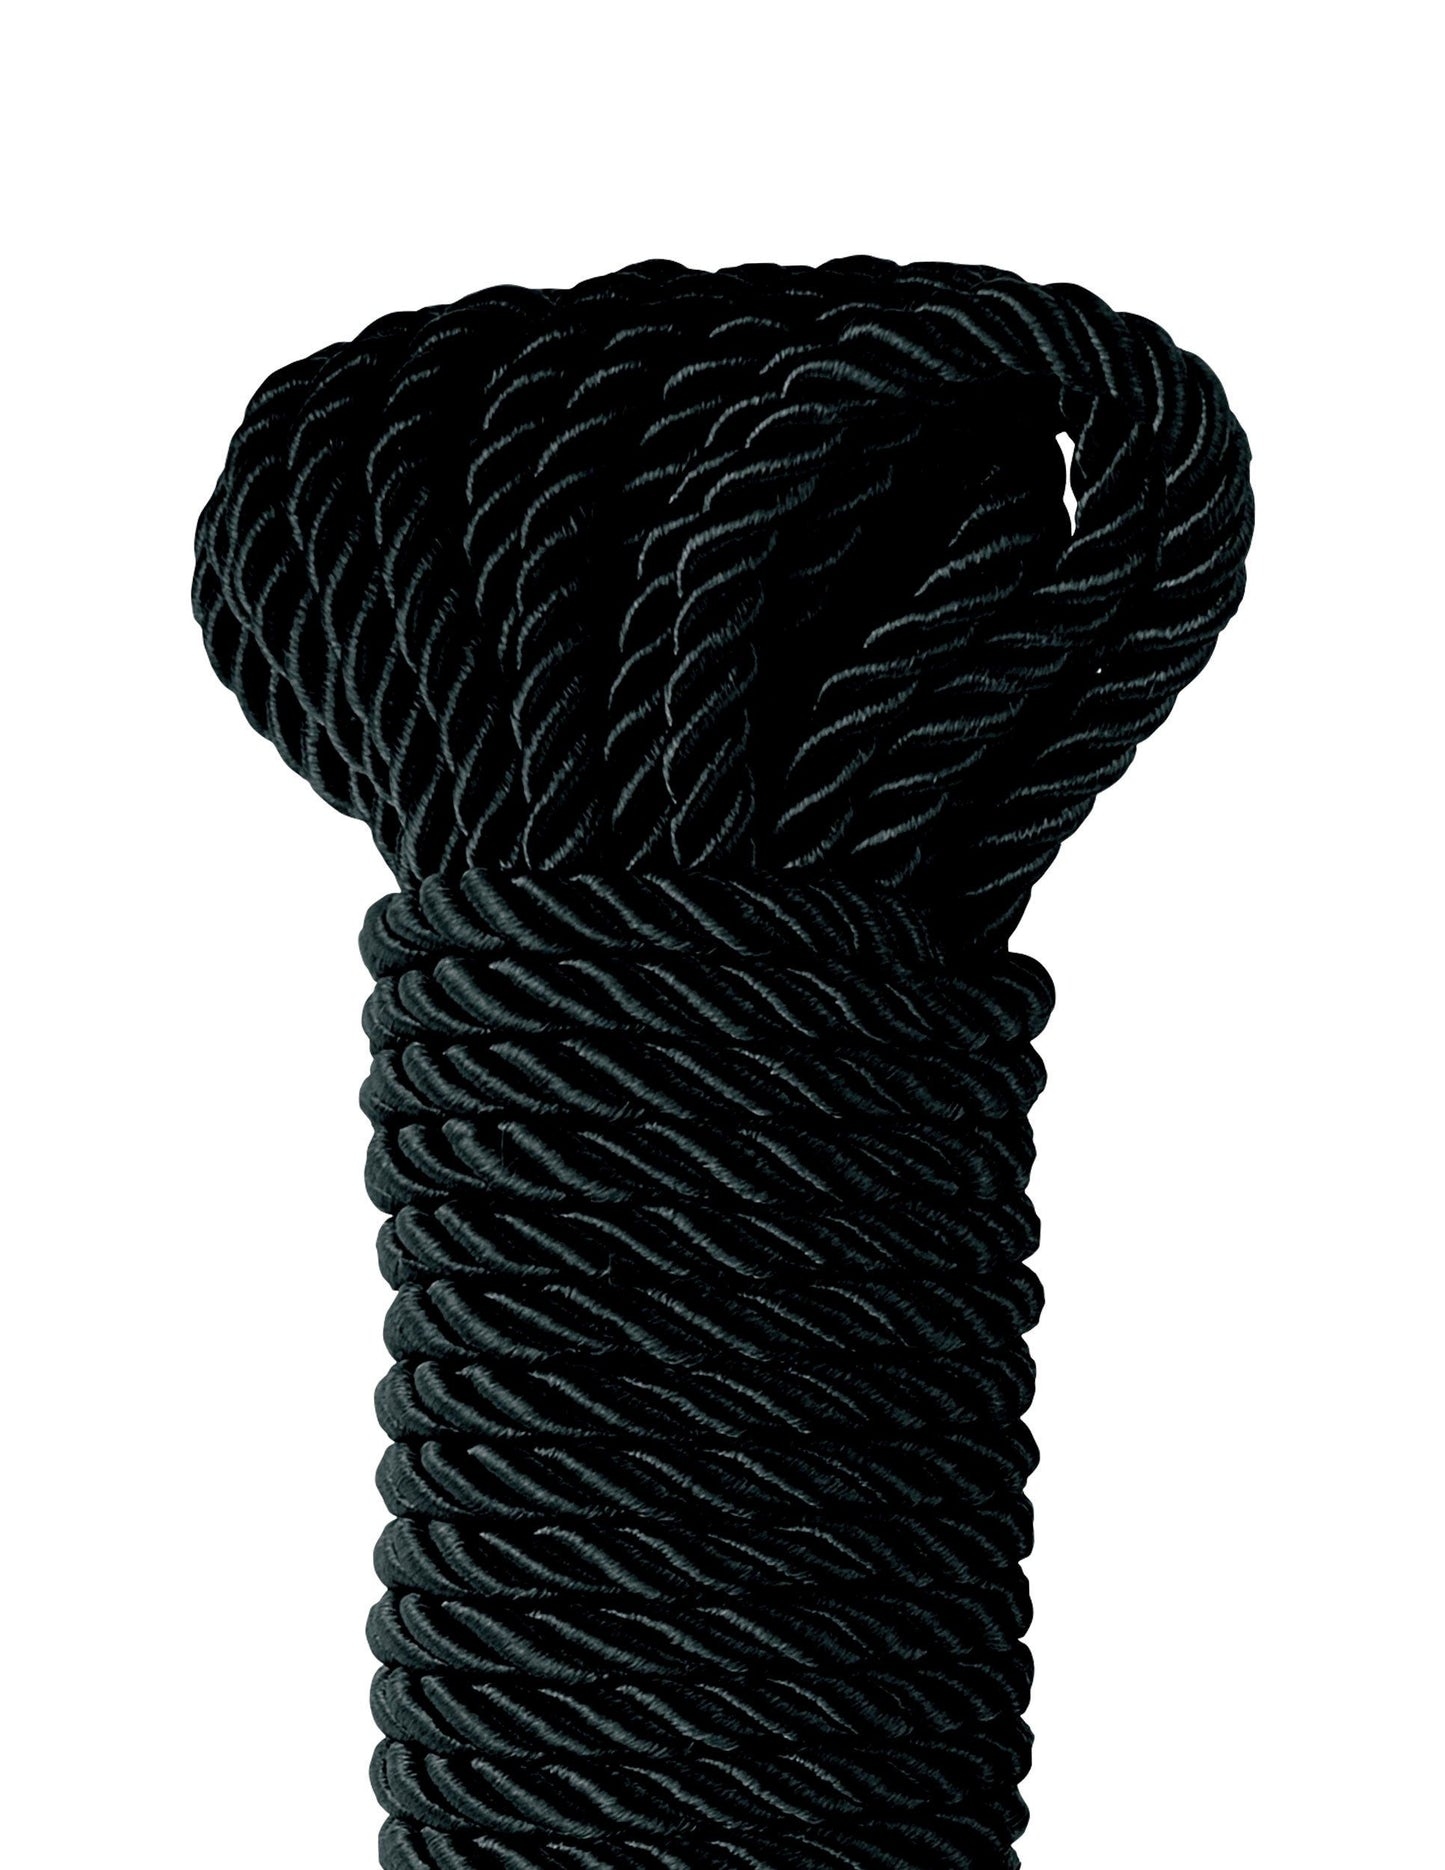 Fetish Fantasy: 32ft Black Silky Rope